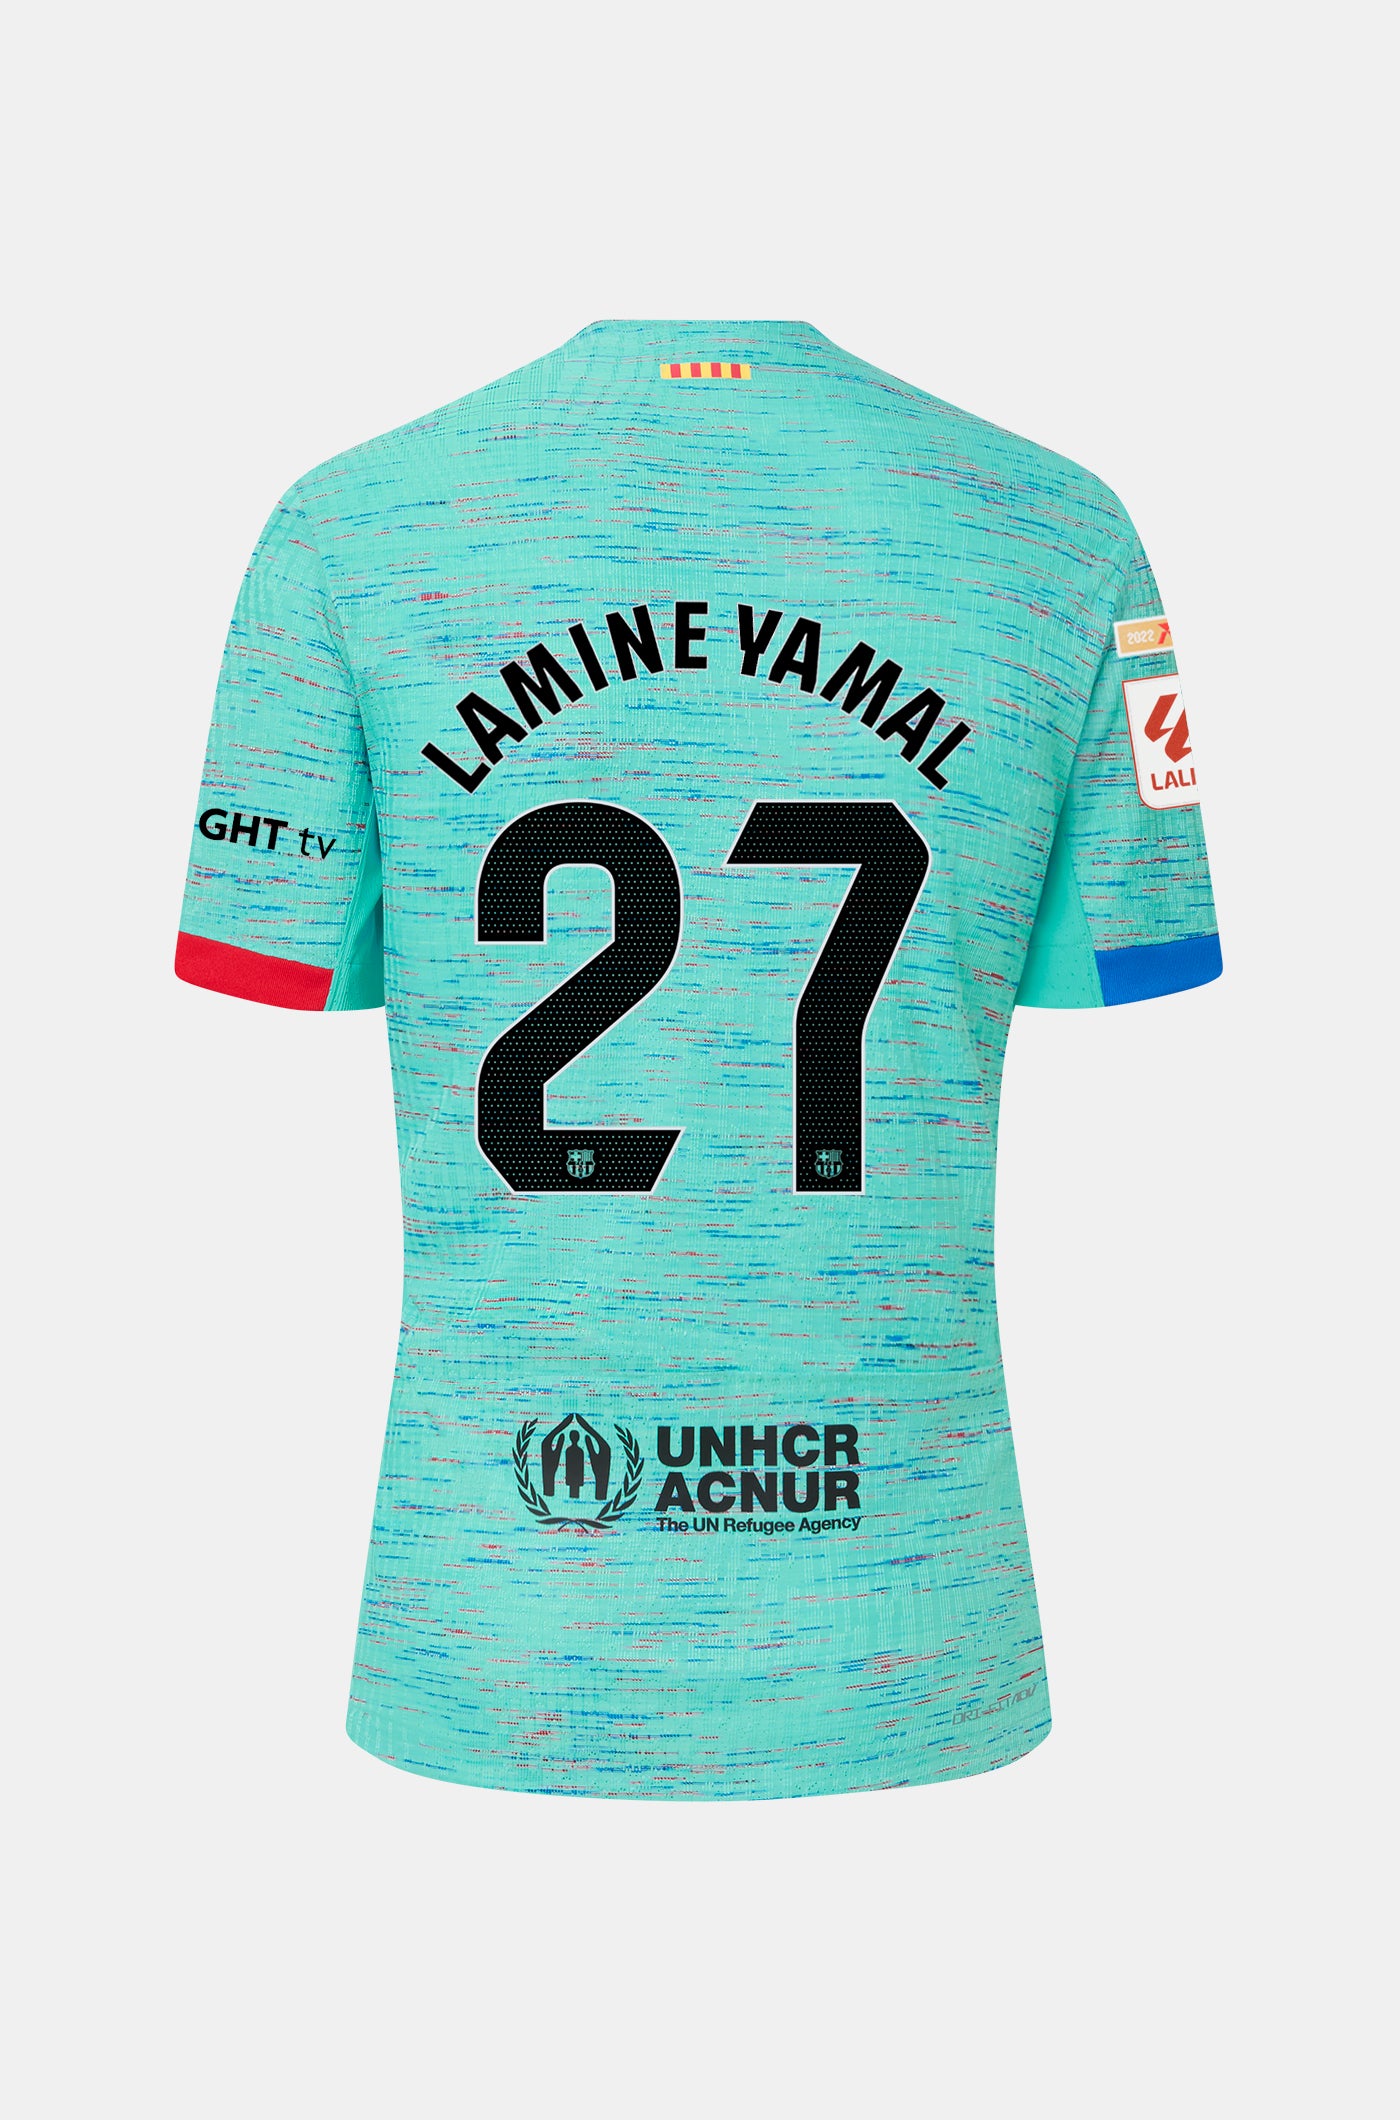 LFP FC Barcelona third shirt 23/24 Player’s Edition  - LAMINE YAMAL